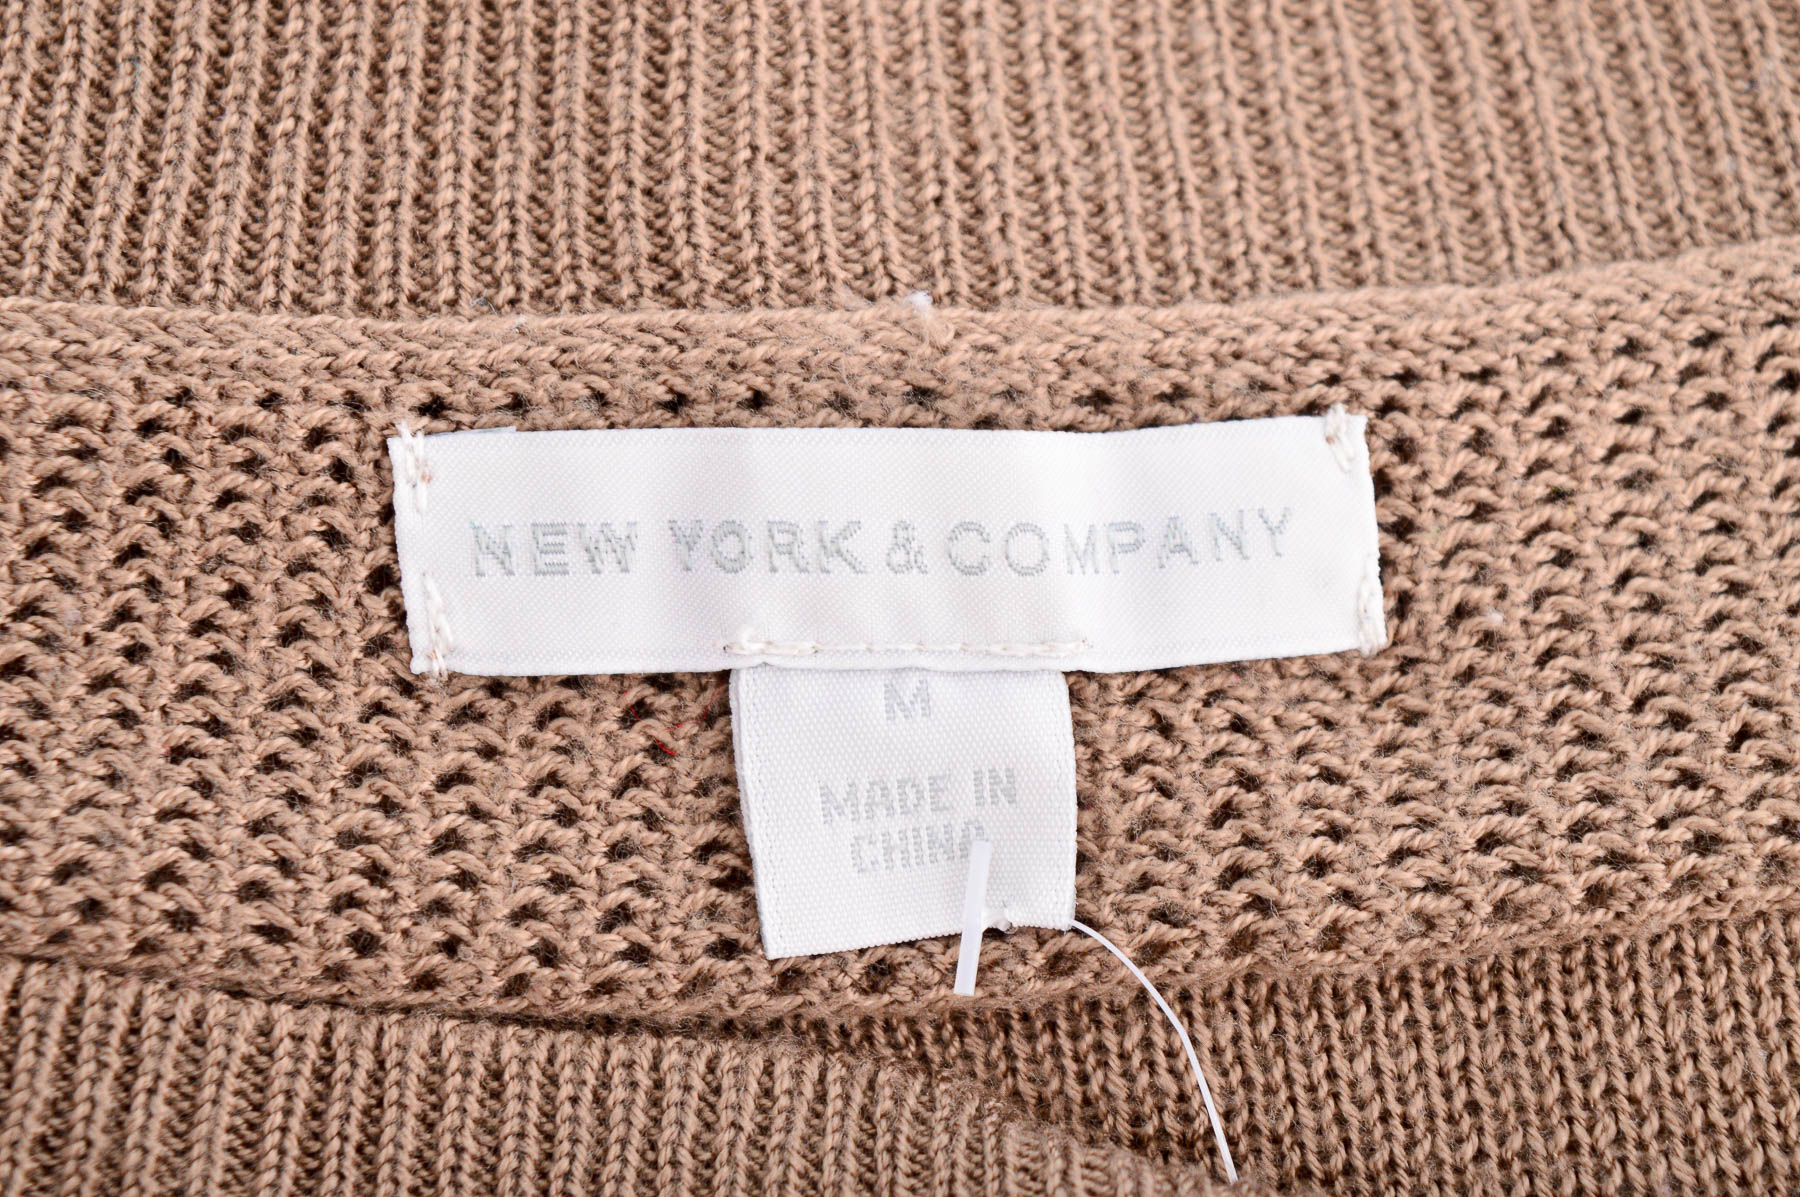 Pulover de damă - New York & Company - 2